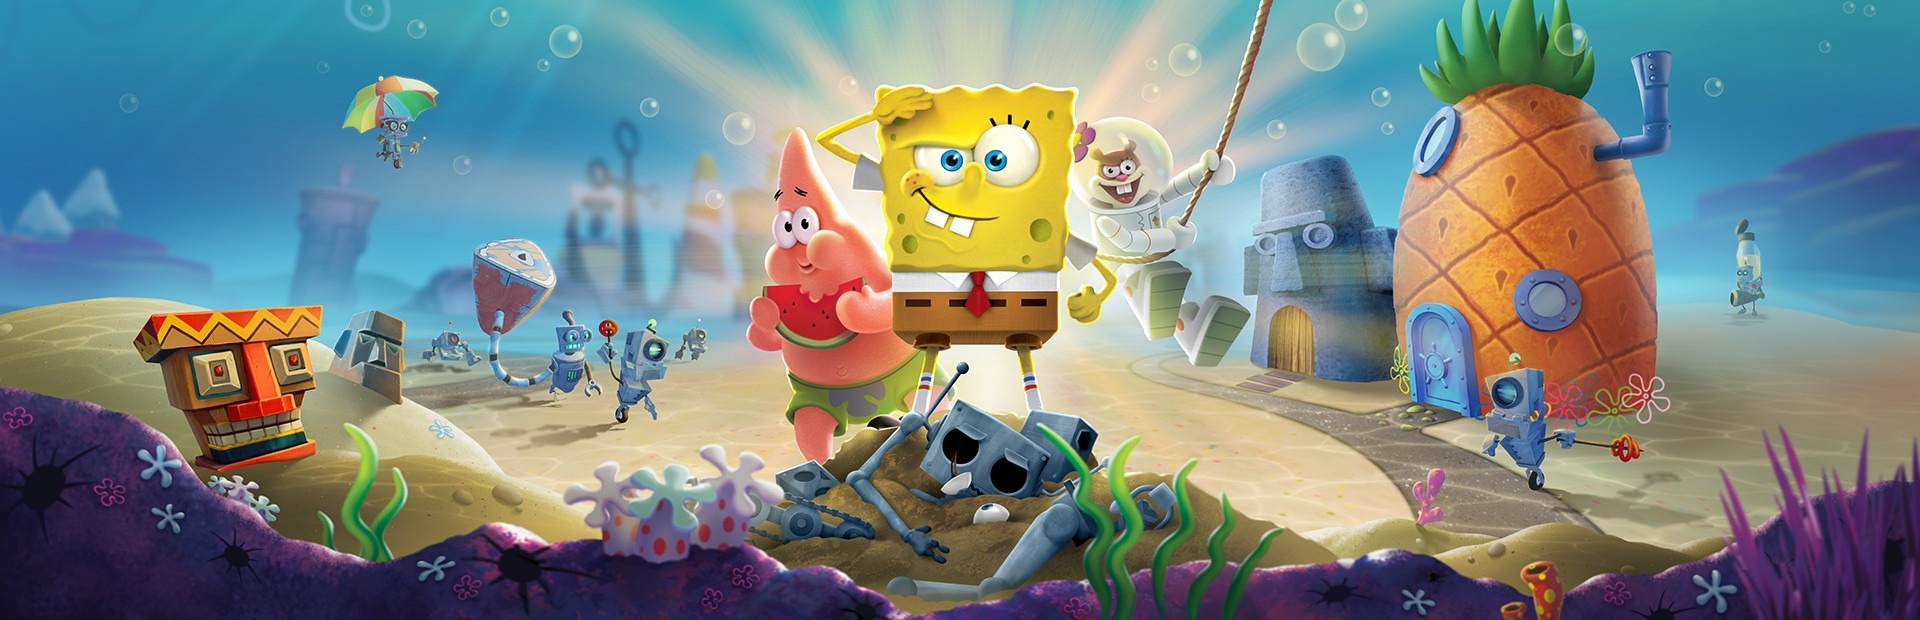 SpongeBob SquarePants: Battle for Bikini Bottom - Rehydrated Switch